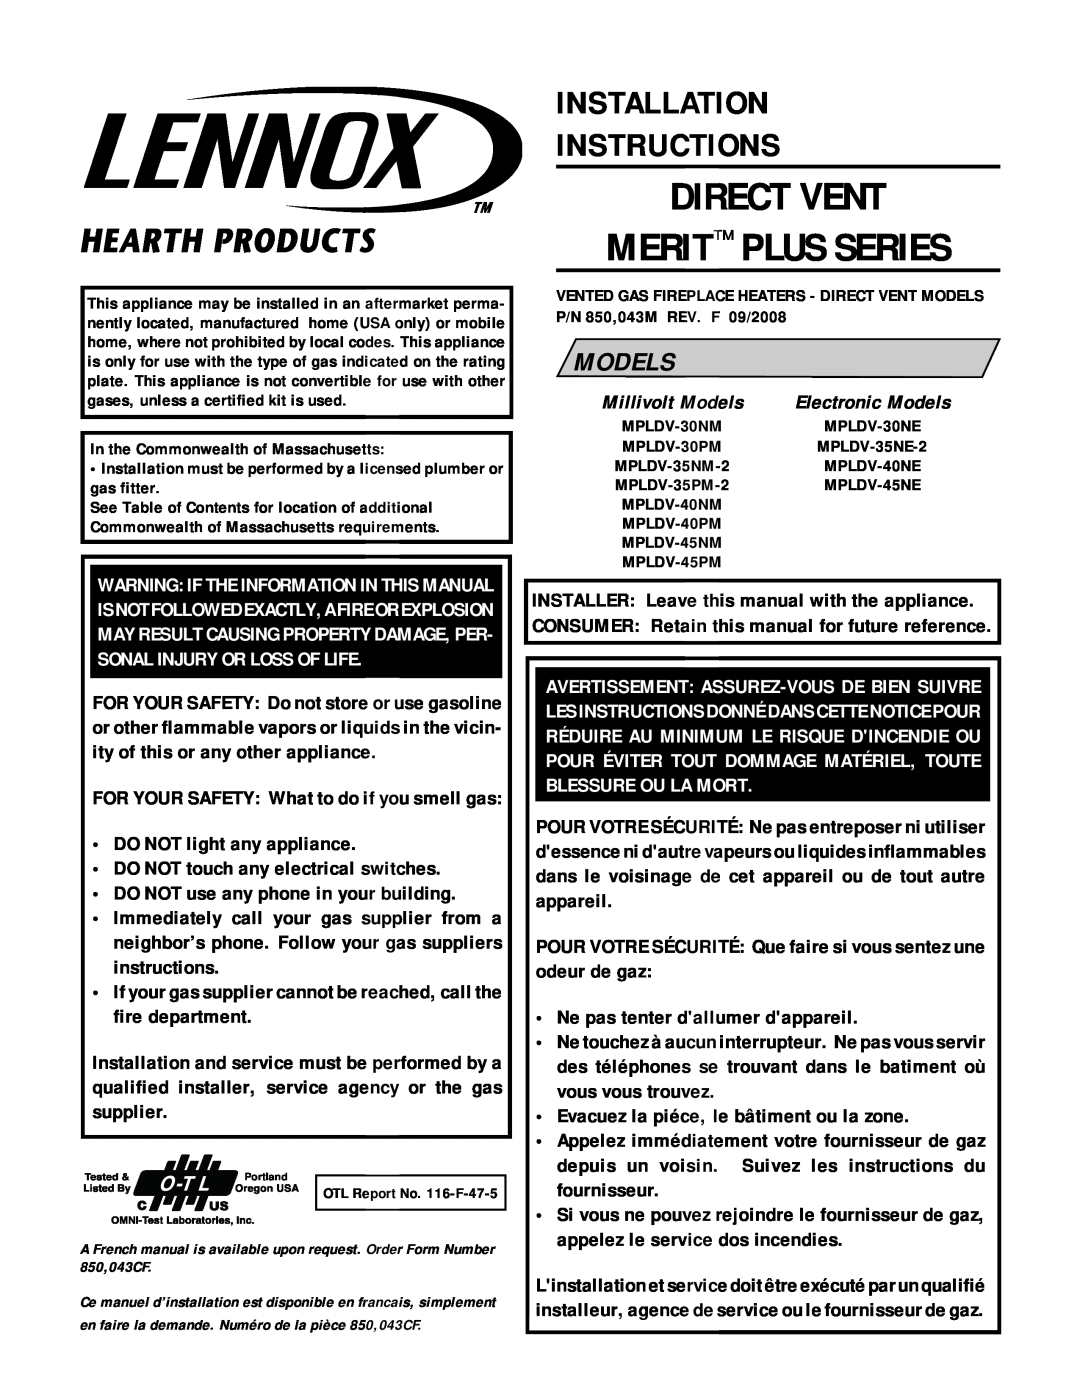 Lennox Hearth MN03-VDLPM installation instructions Direct Vent Merit Plus Series, Installation Instructions, Models 